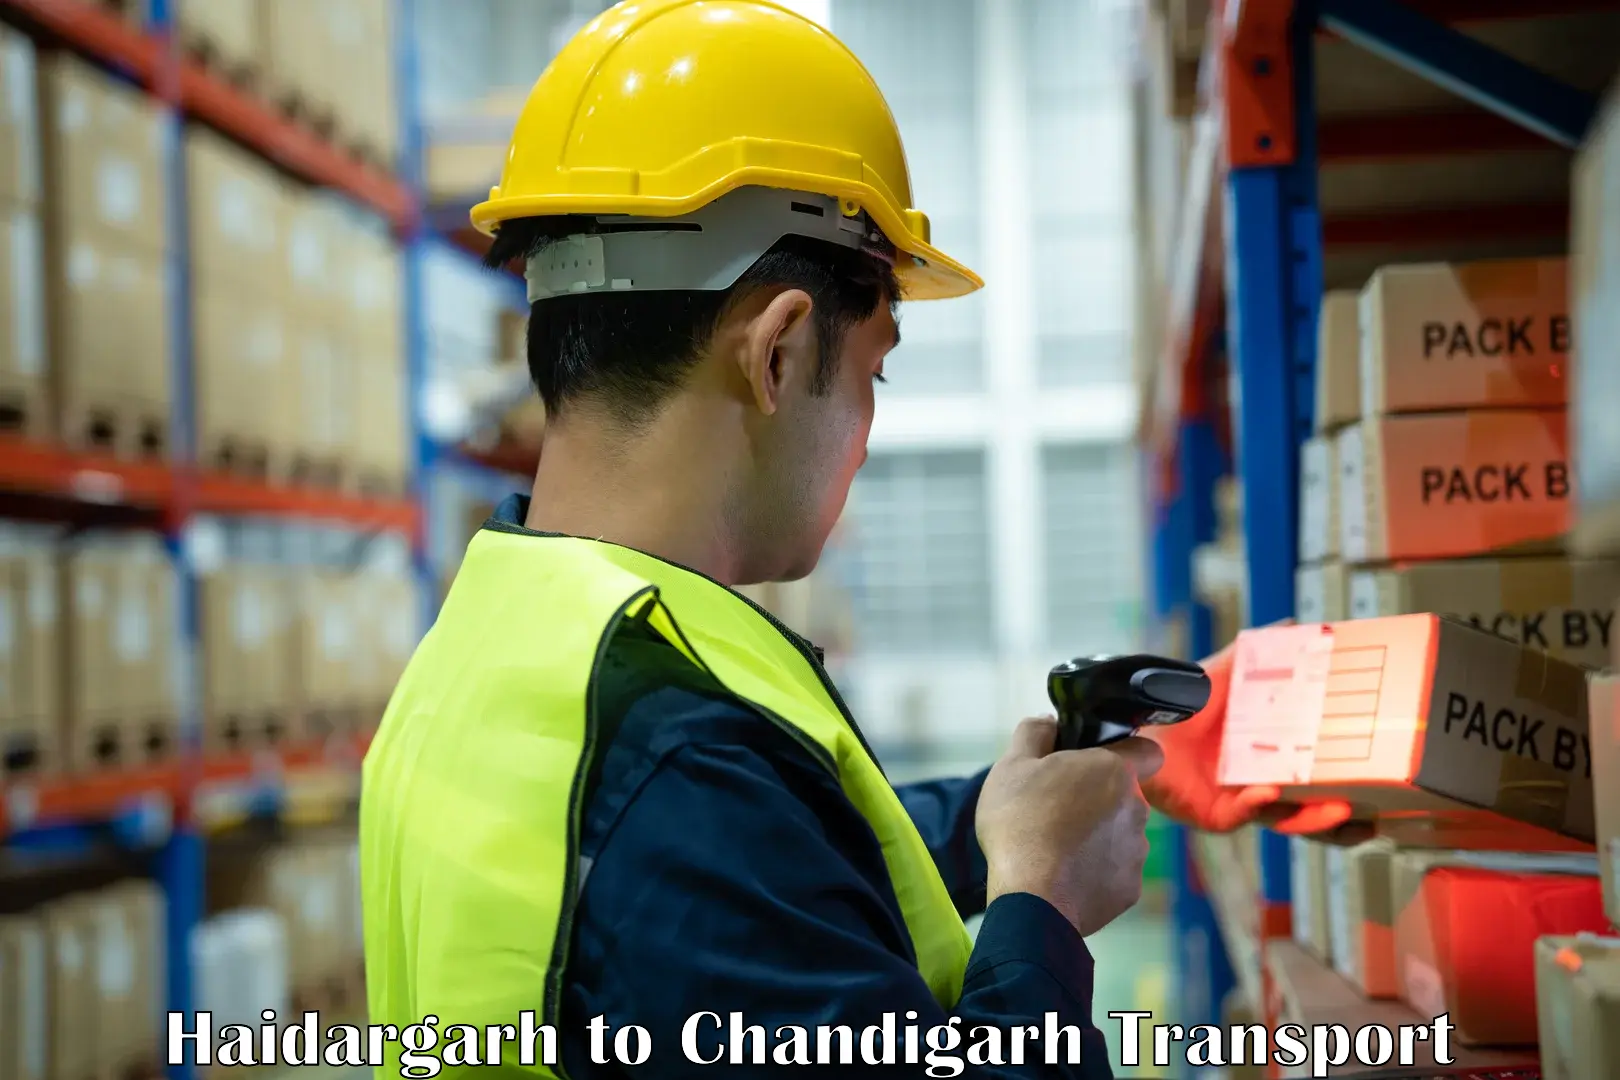 Delivery service Haidargarh to Chandigarh